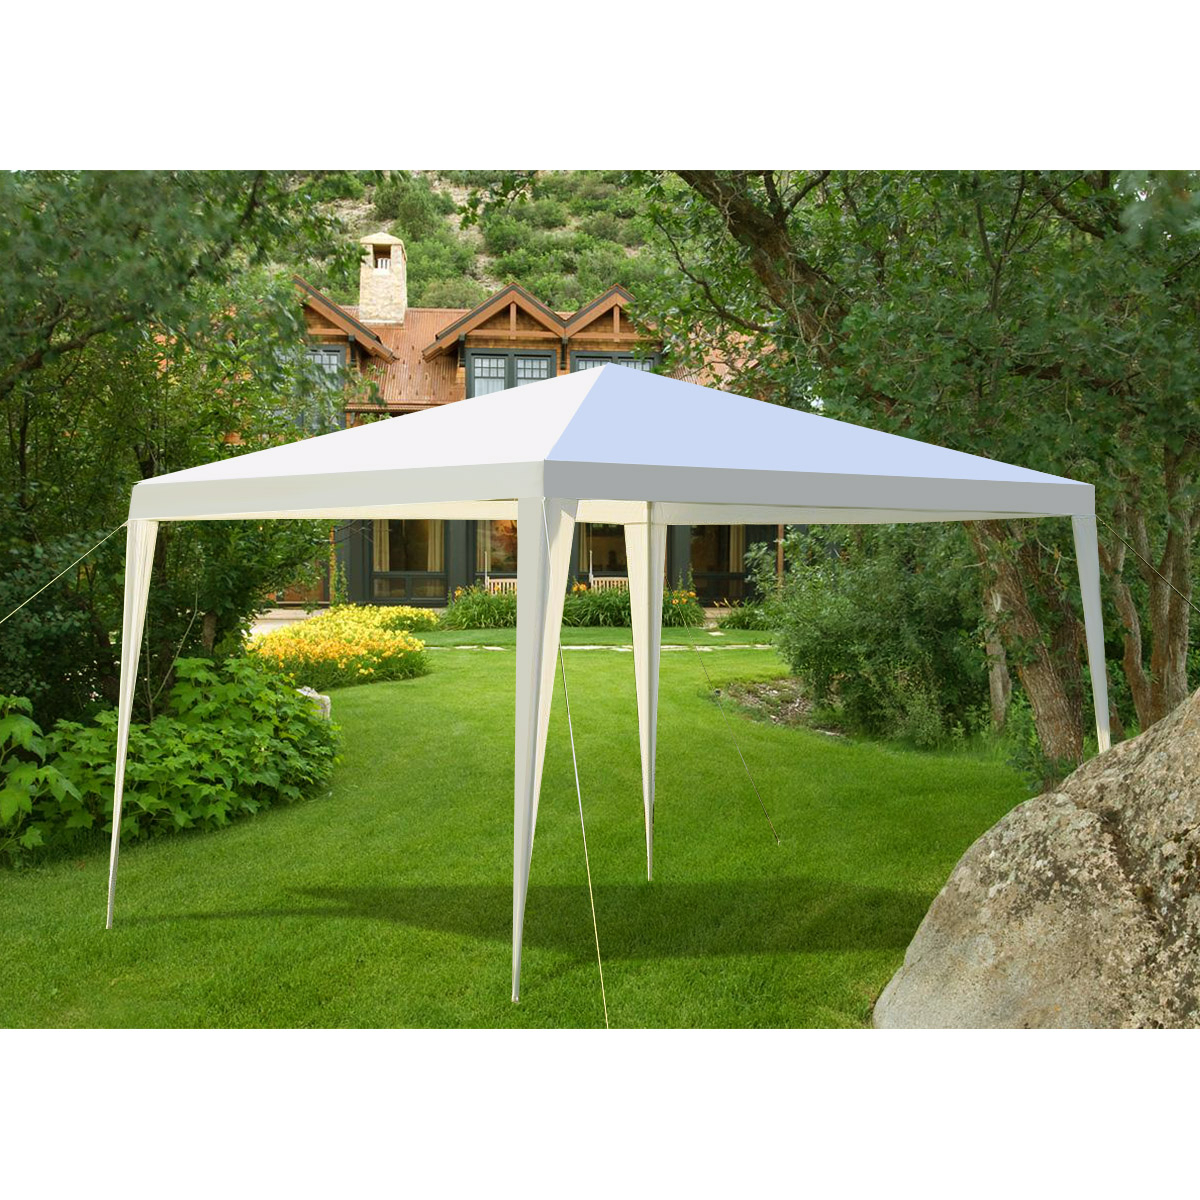 10'x10' Canopy Party Wedding Tent Gazebo Heavy Duty Outdoor